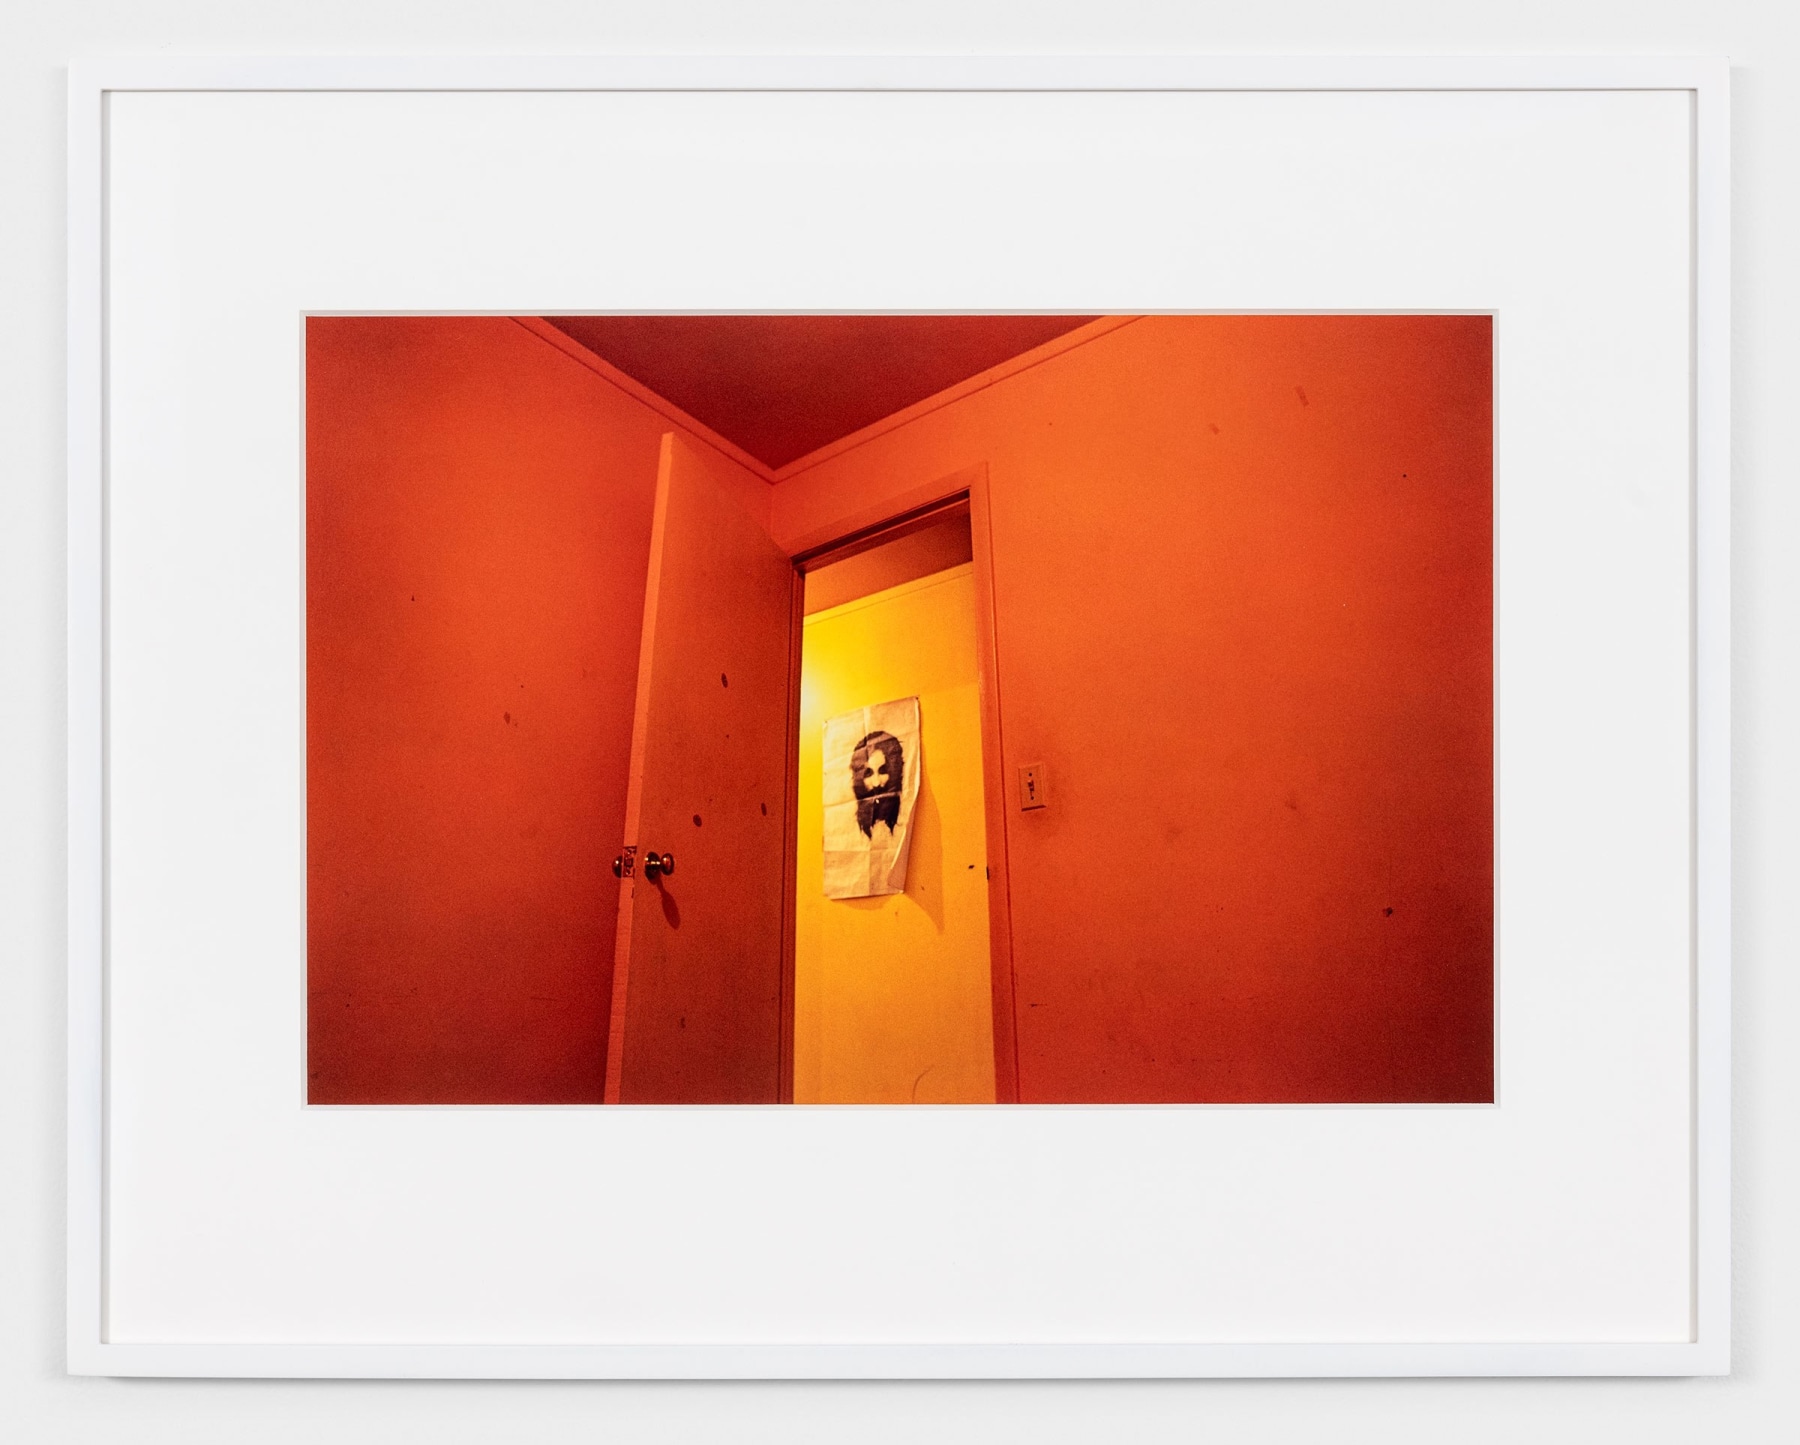 EG.19818 - 1 (Orange Room)